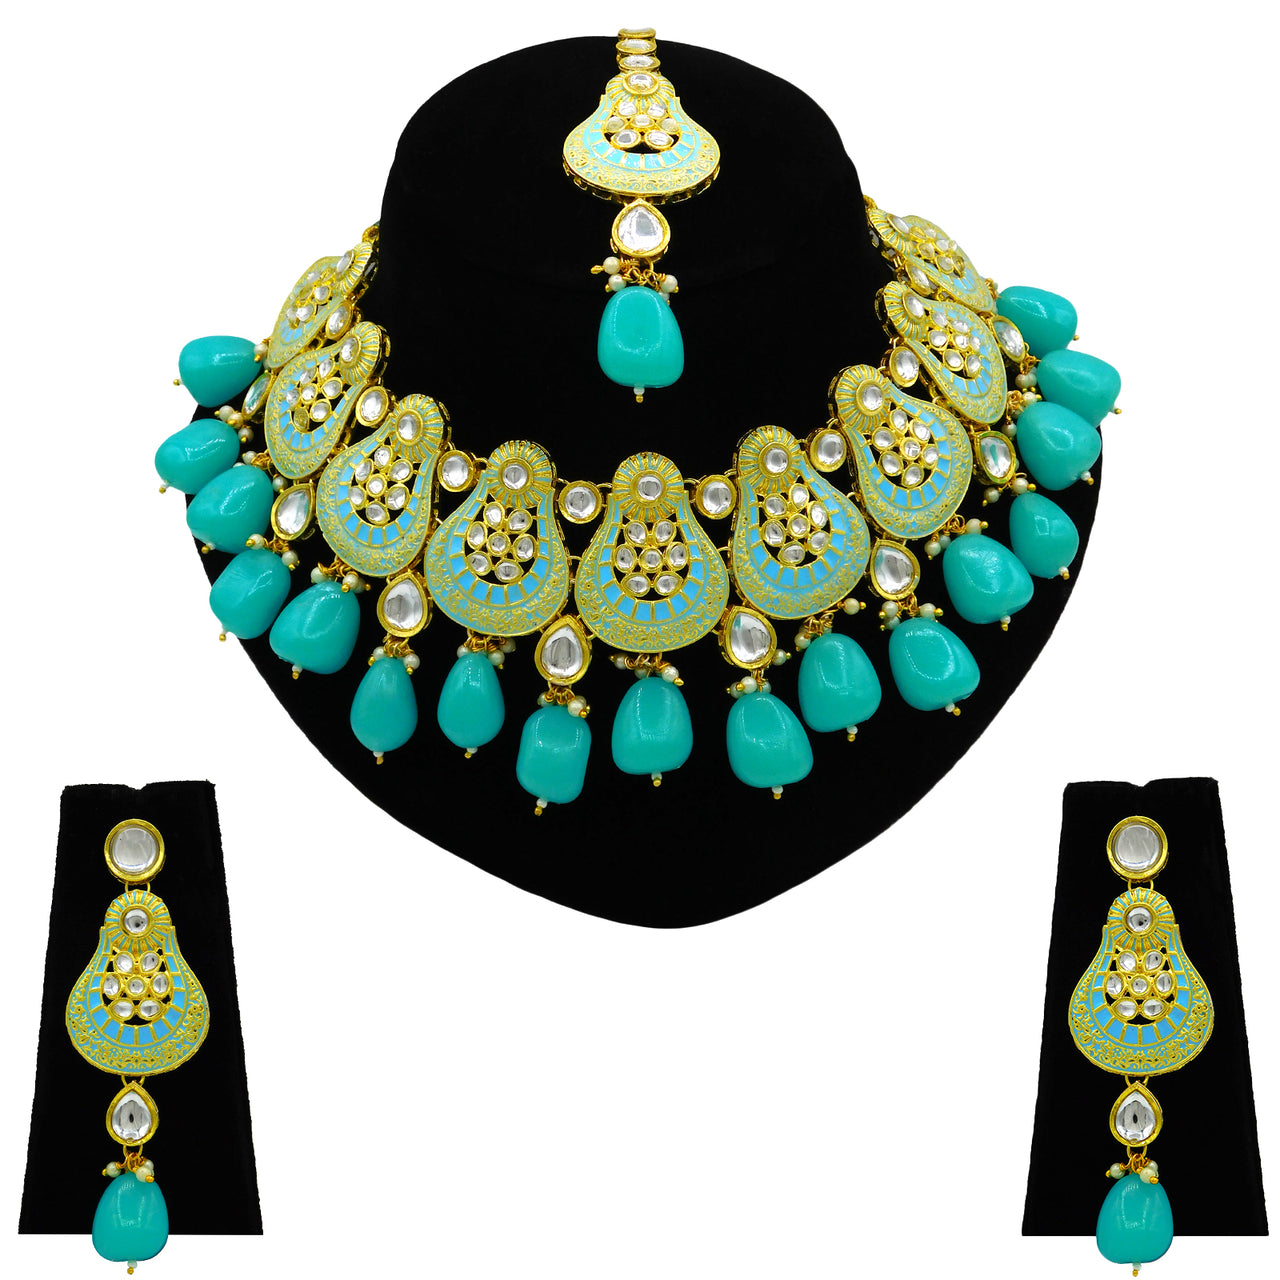 Sujwel Gold Plated Kundan Meenakari Choker Necklace Set (08-0447) - Sujwel